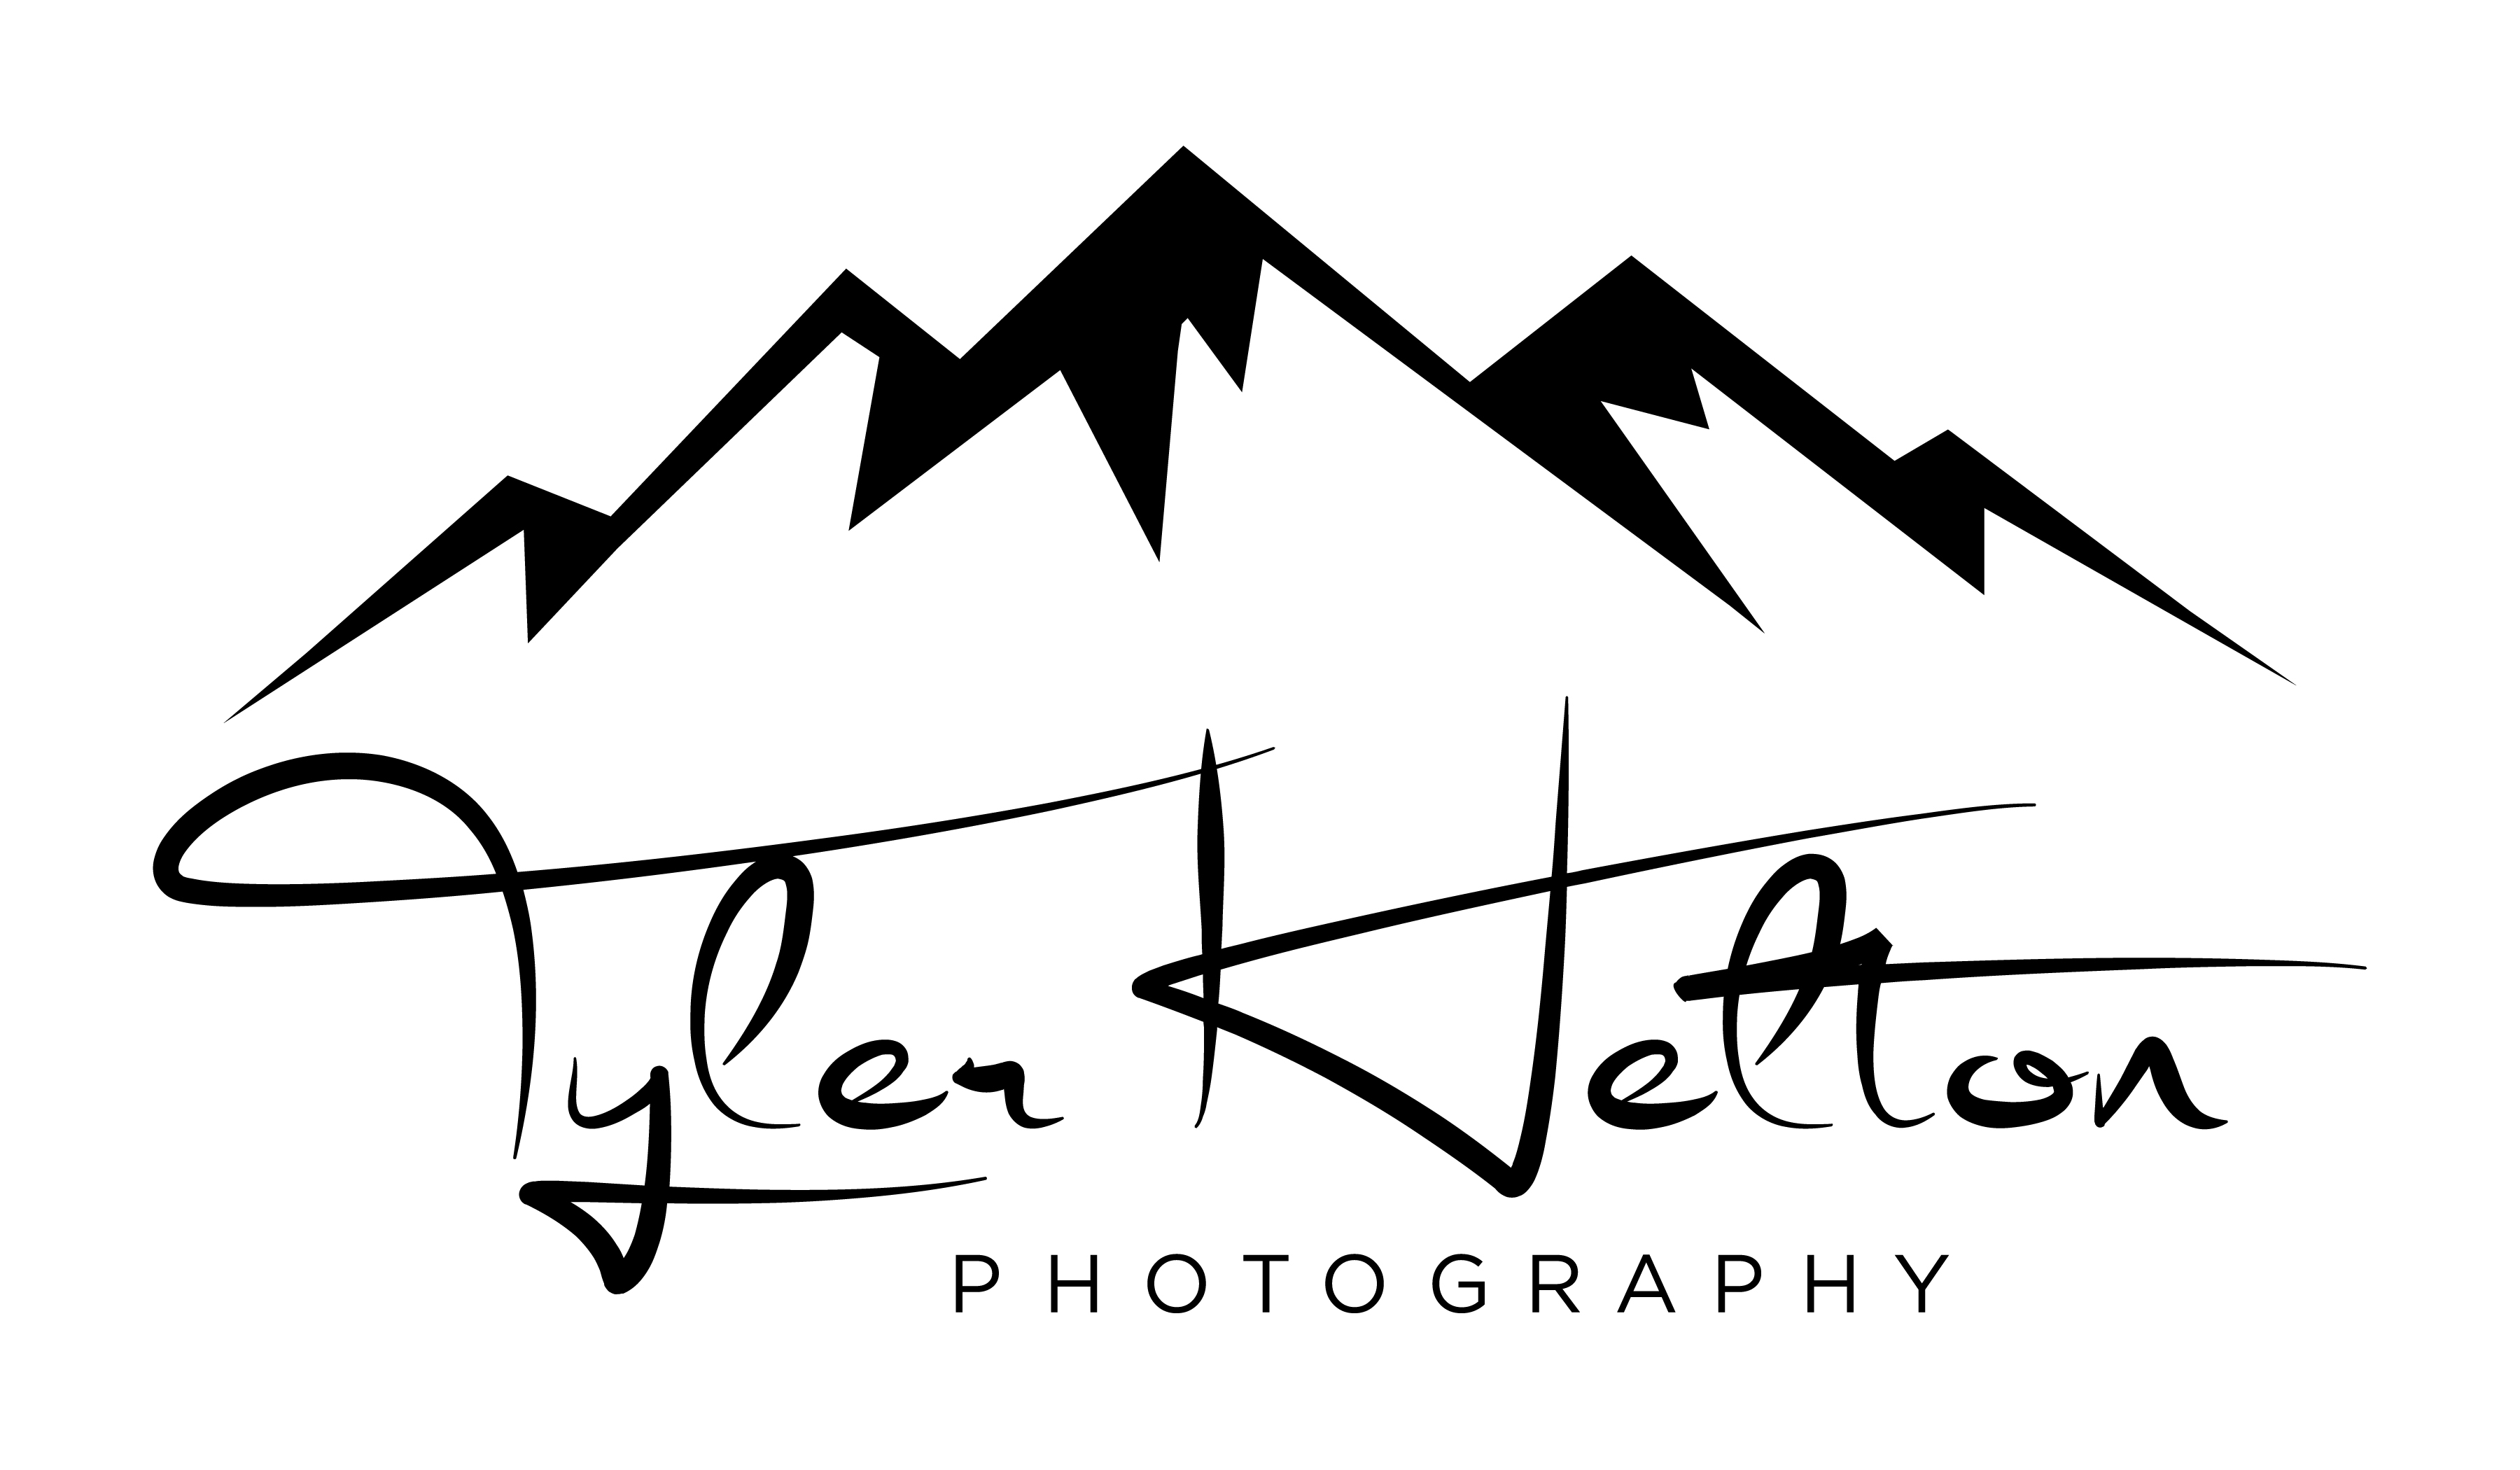 Tyler Helton Photography